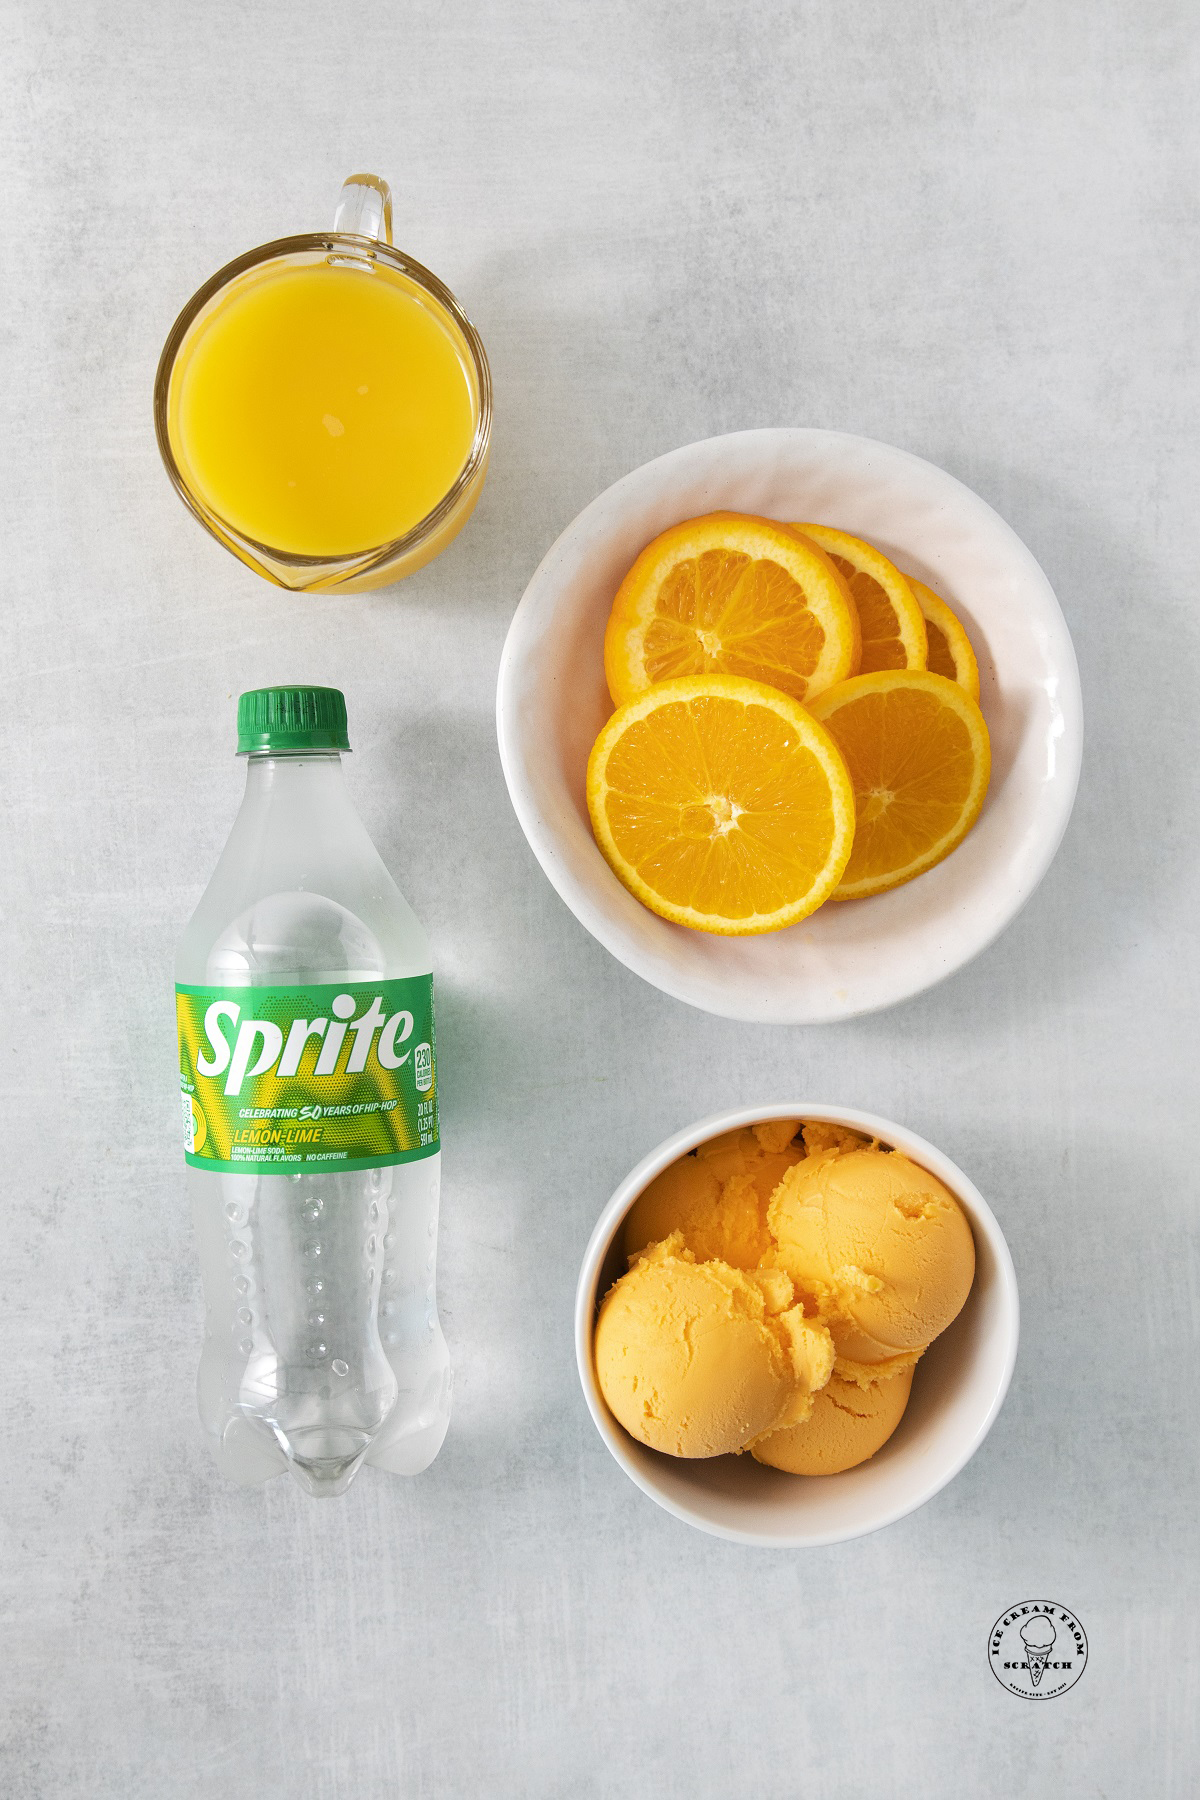 A bowl of sliced oranges, a bowl of orange sherbet, a bottle of sprite, and a cup of orange juice.